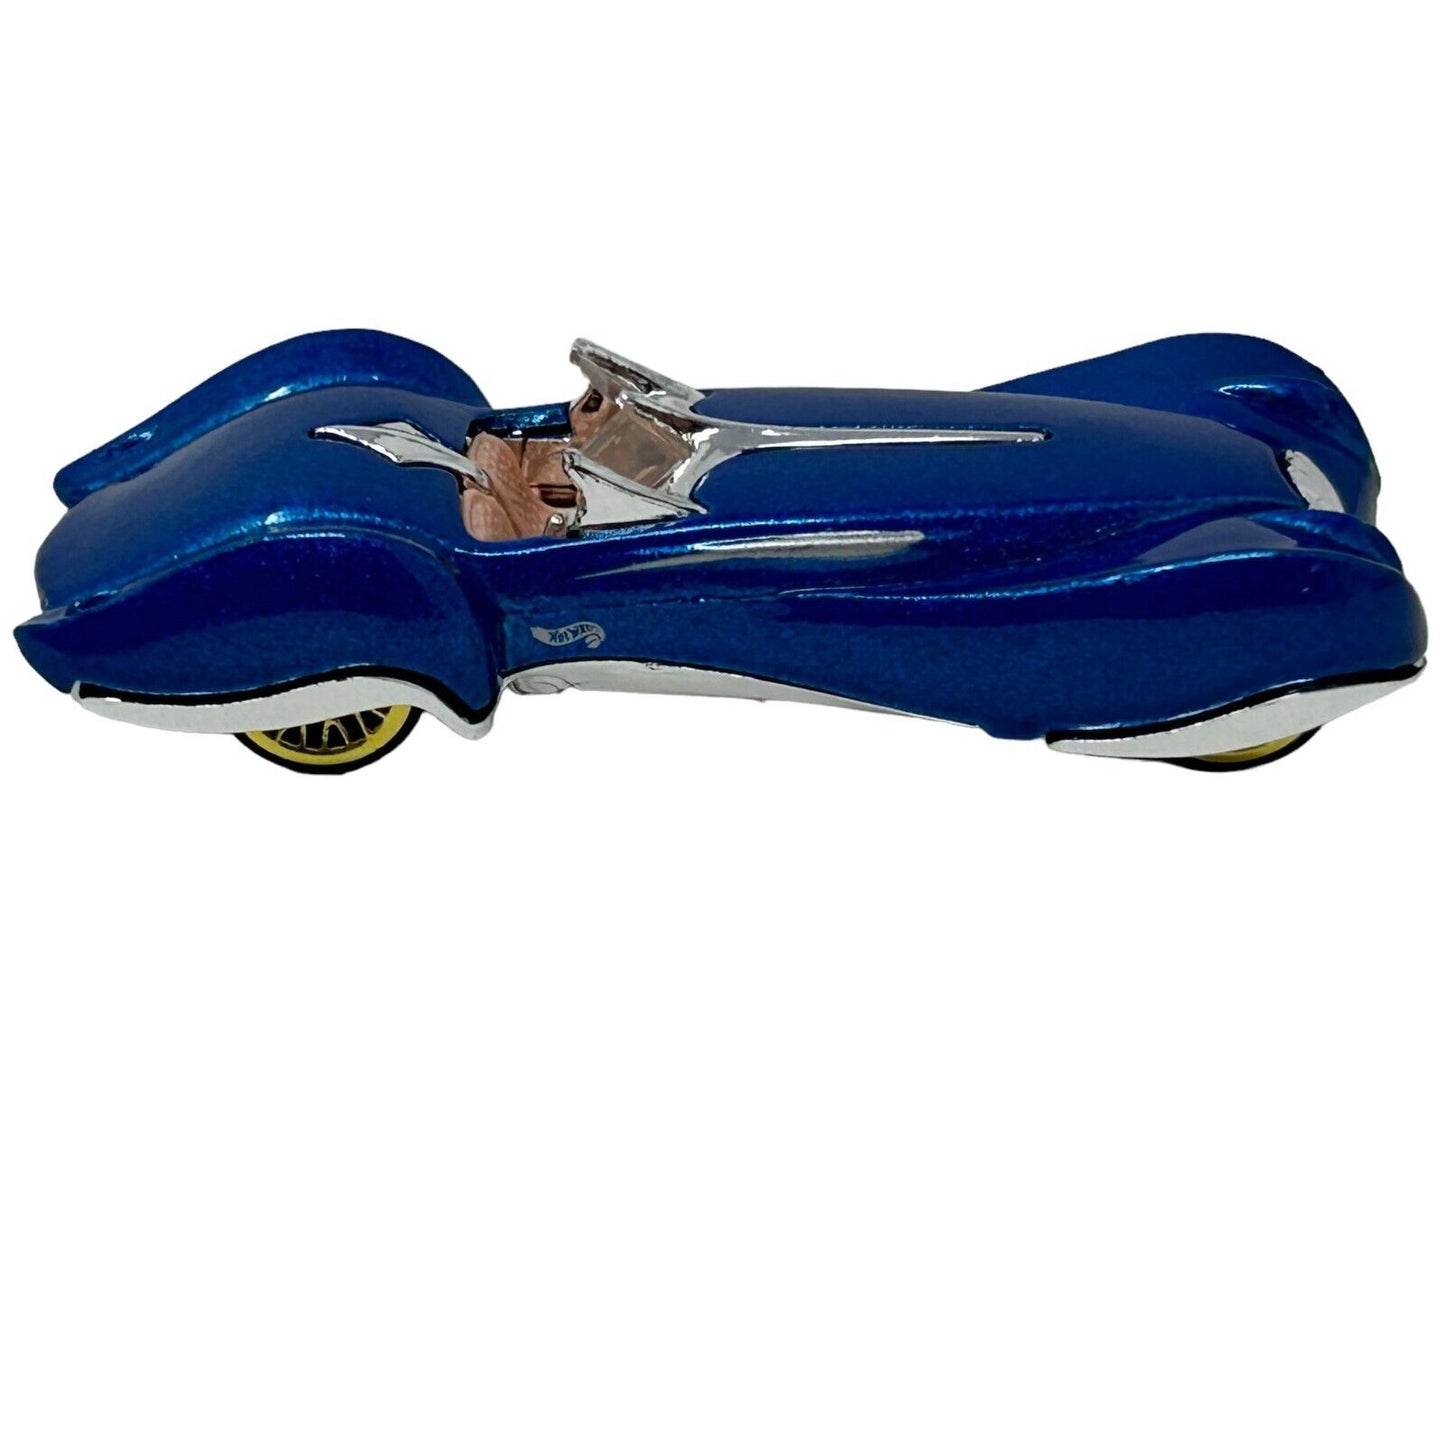 Phantastique Hot Wheels Collectible Diecast Car Blue Convertible Vehicle Vintage